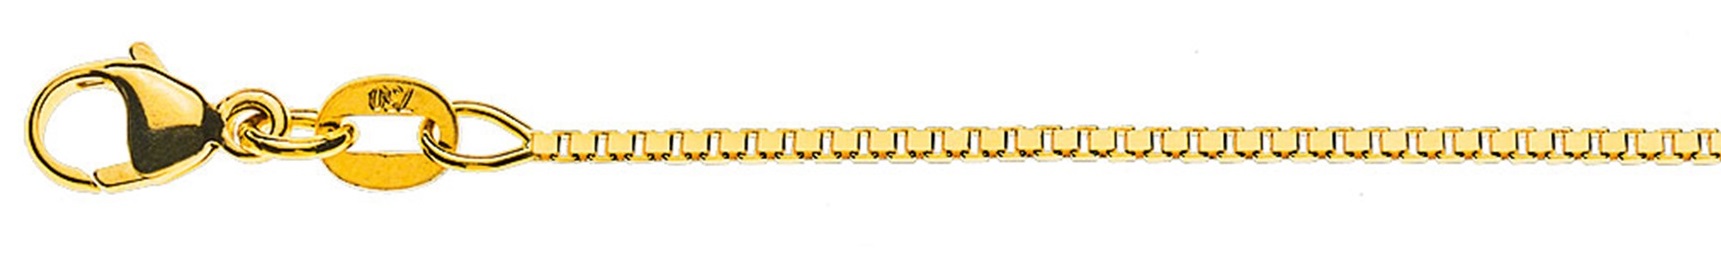 AURONOS Prestige Necklace yellow gold 18K Venetian chain diamond 50cm 1.1mm